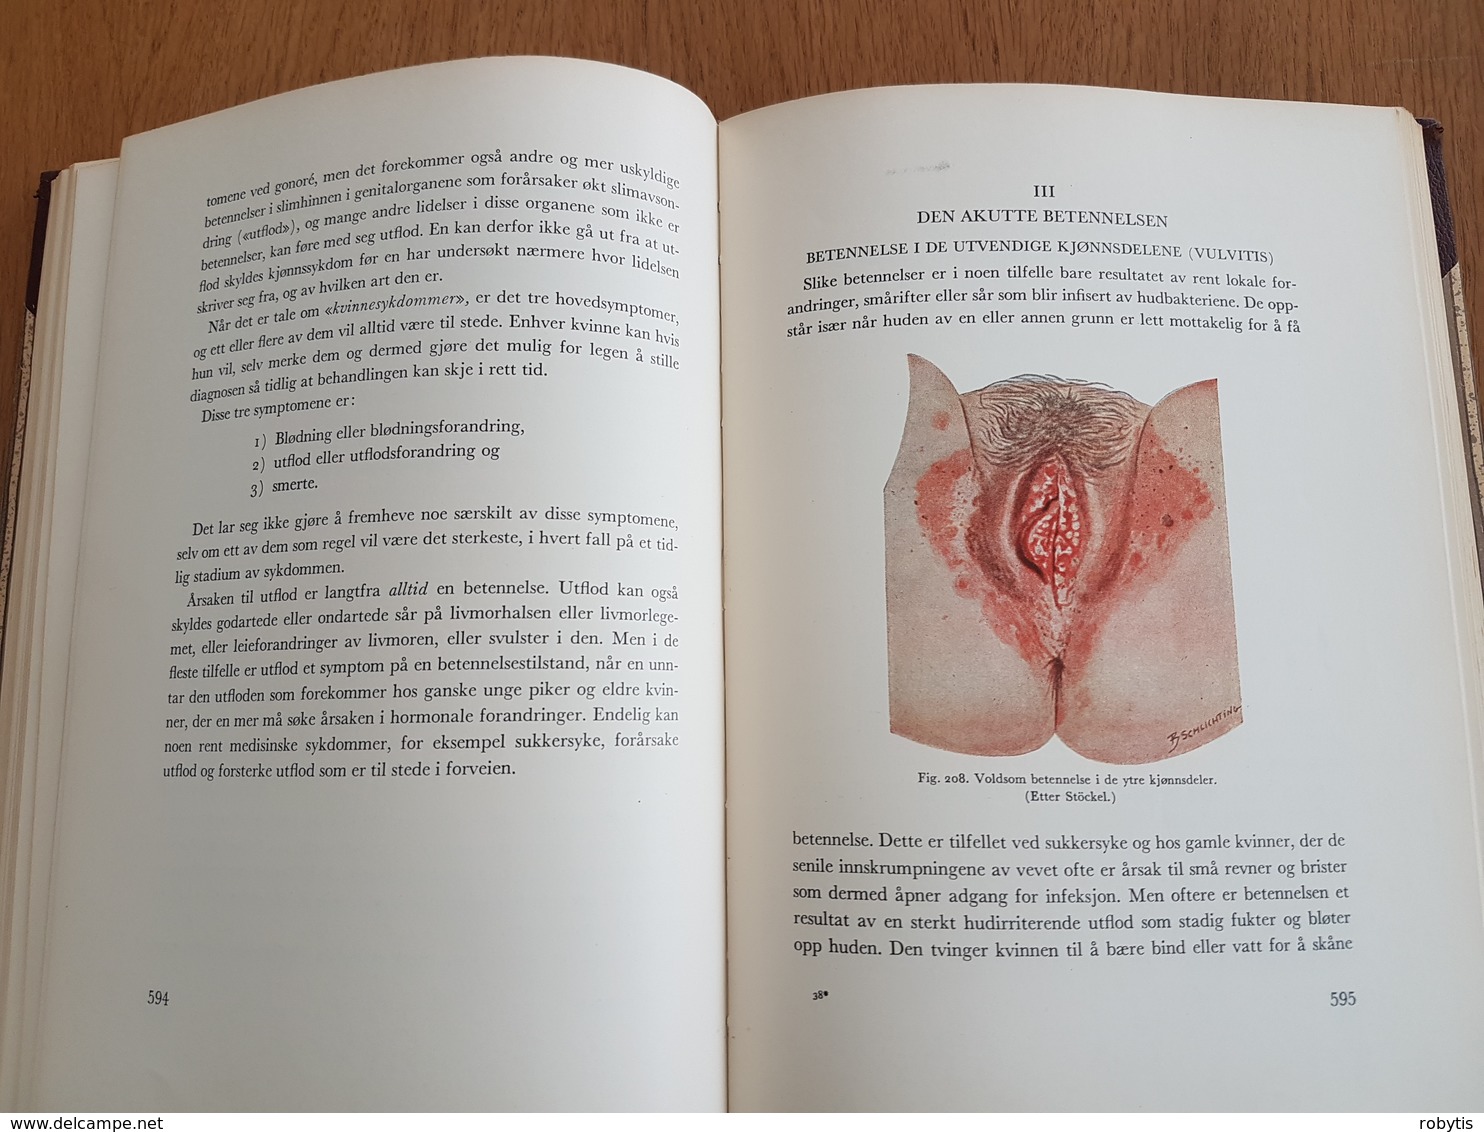 Norway medical book